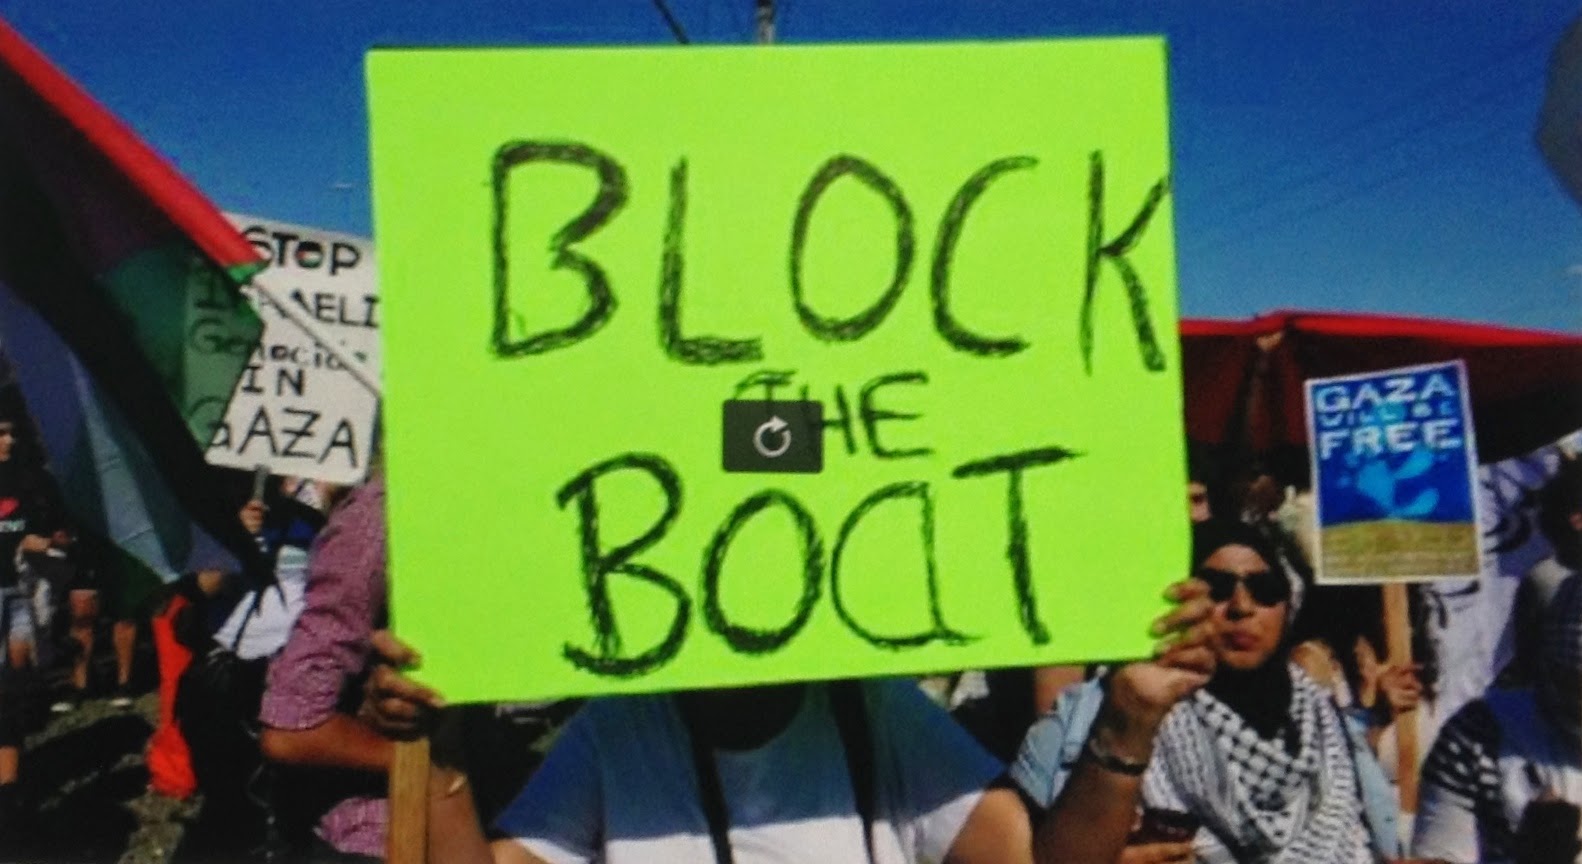 http://www.presstv.com/detail/2014/09/28/380291/us-protesters-block-israeli-ship/